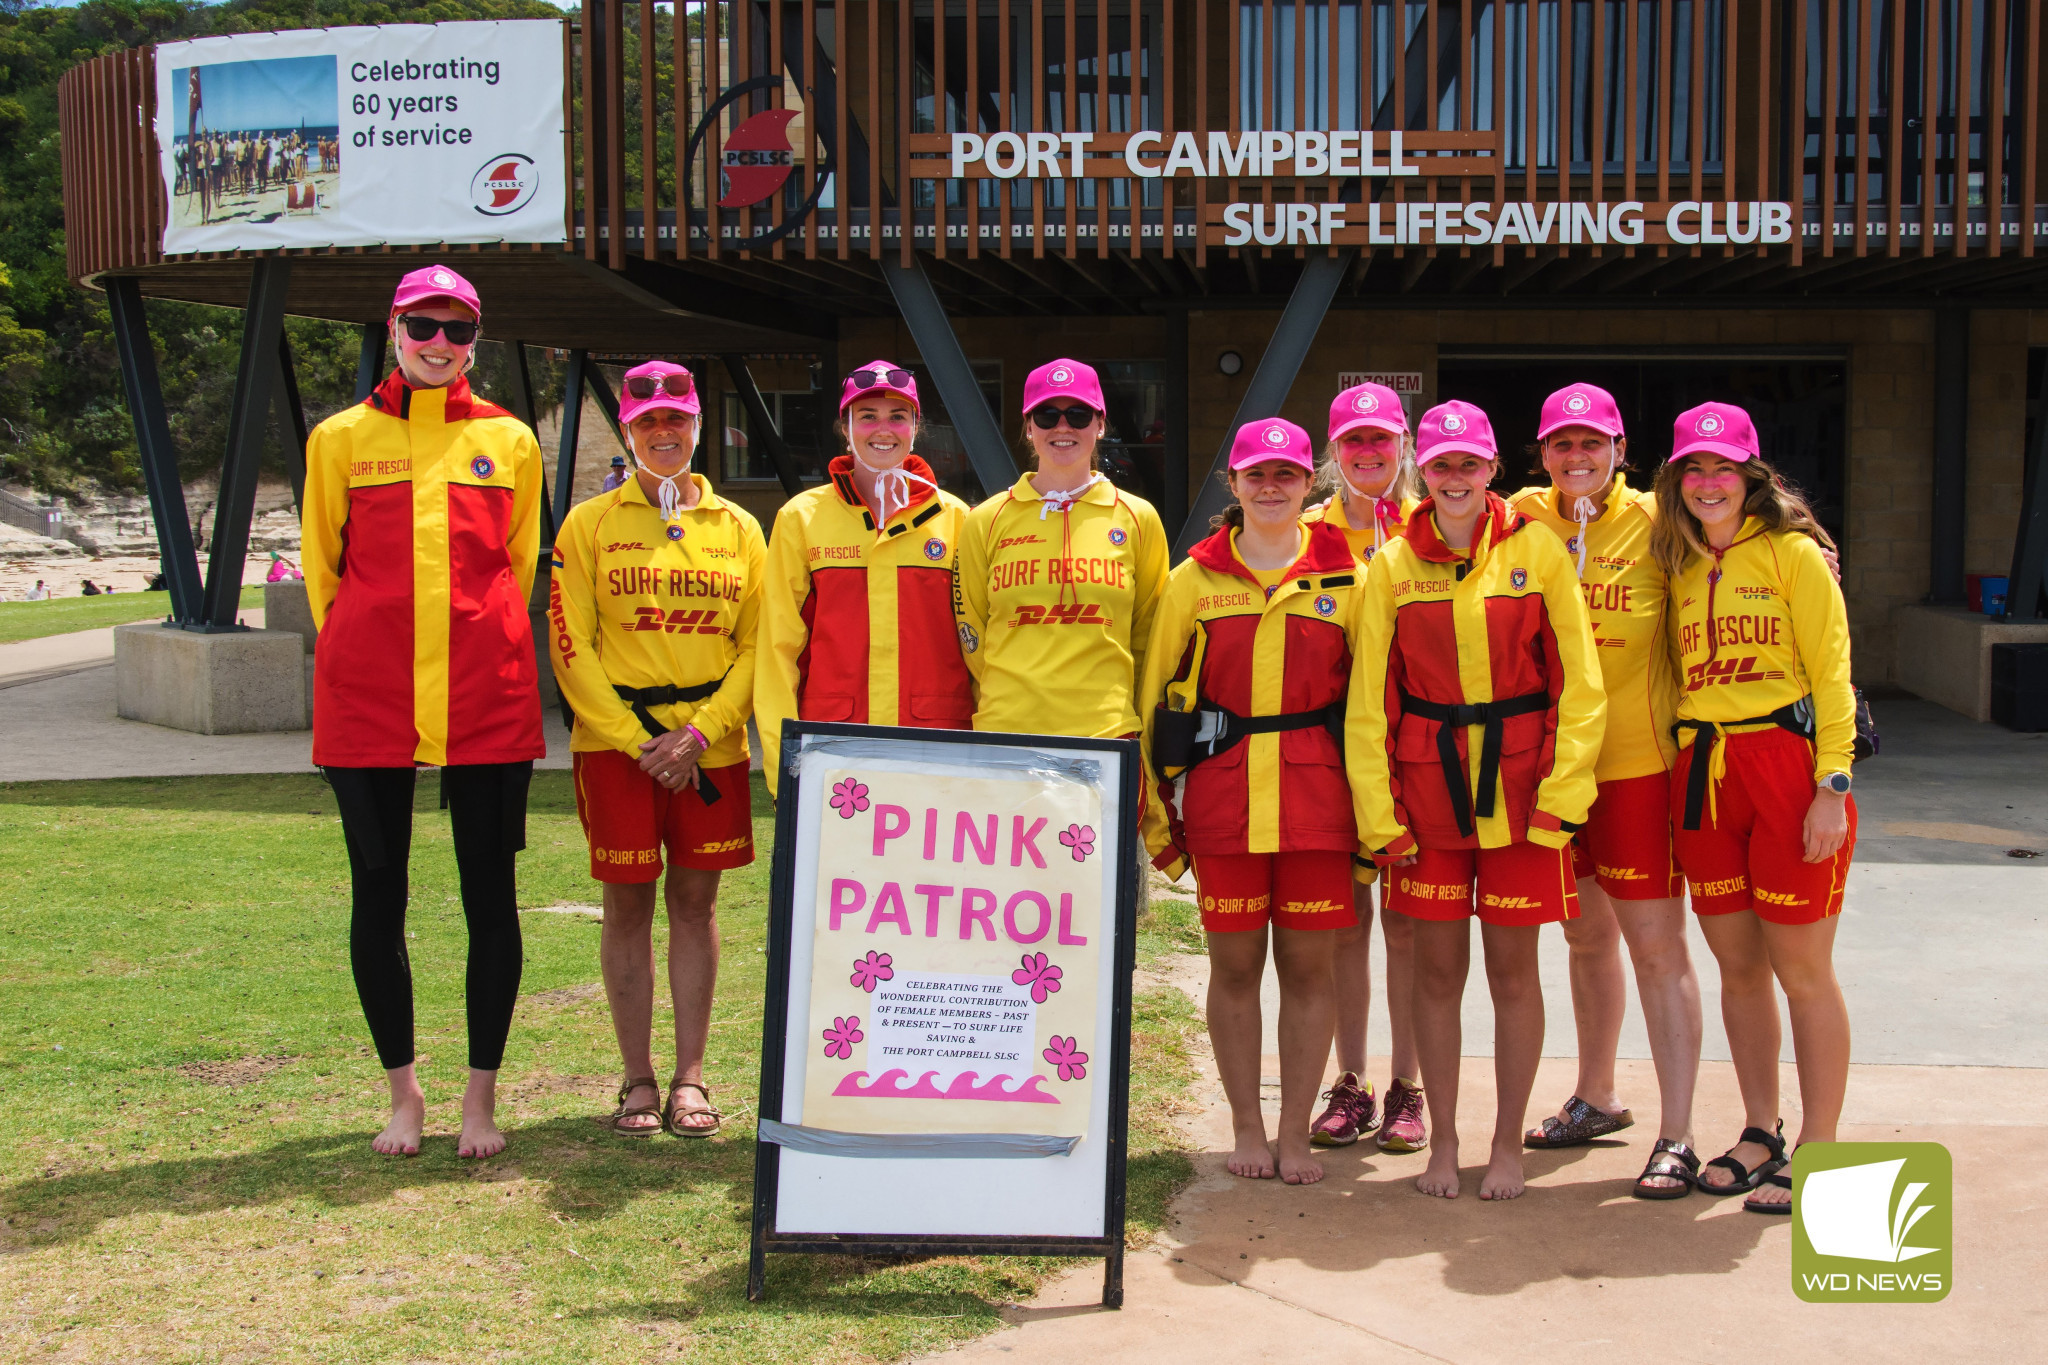 Pink patrol: Port Campbell Surf Life Saving Club members Susanna Ryan, Katy Millard, Molly Jones, Olivia Whiting, Lola Hayes, Amanda Couch, Ava Cunningham, Bec McAuliffe and Sarah Matthews took part in the recent 'pink patrol'.